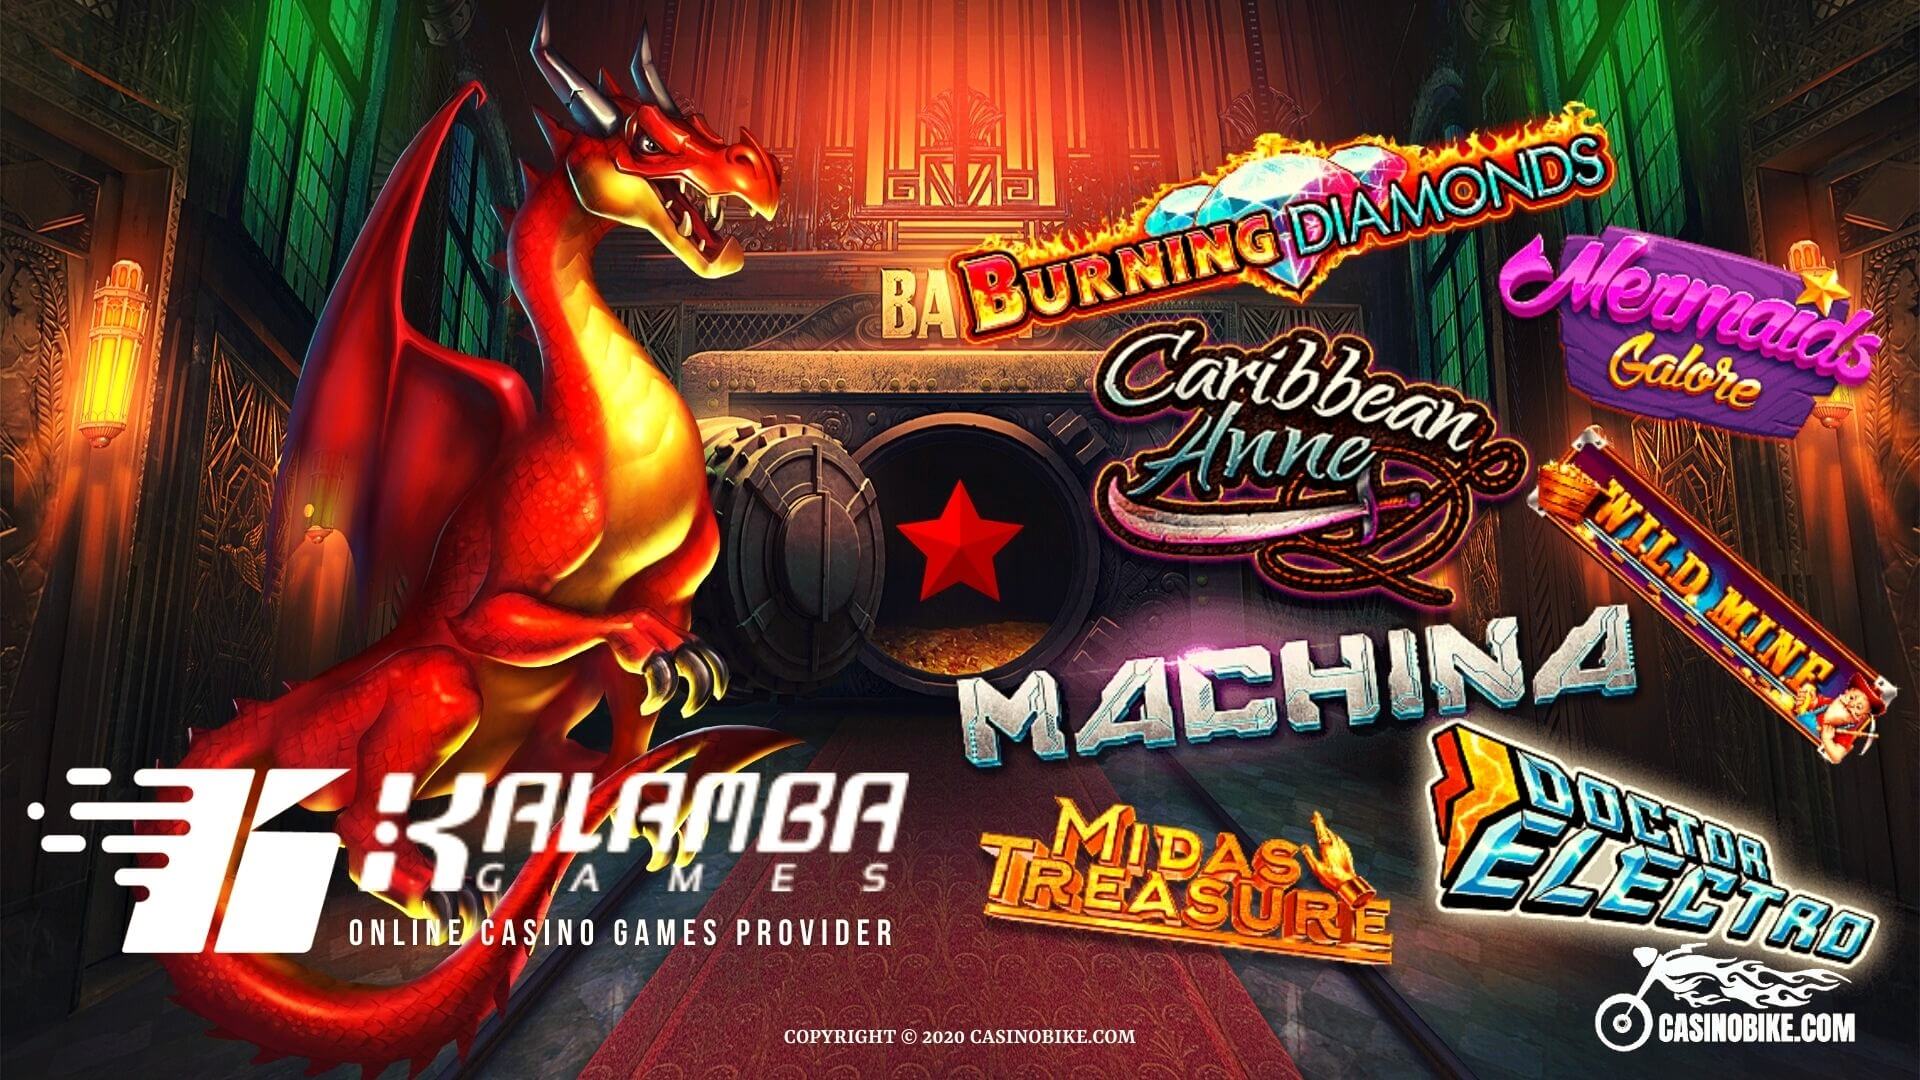 Kalamba Games Online Casino Software Provider Review